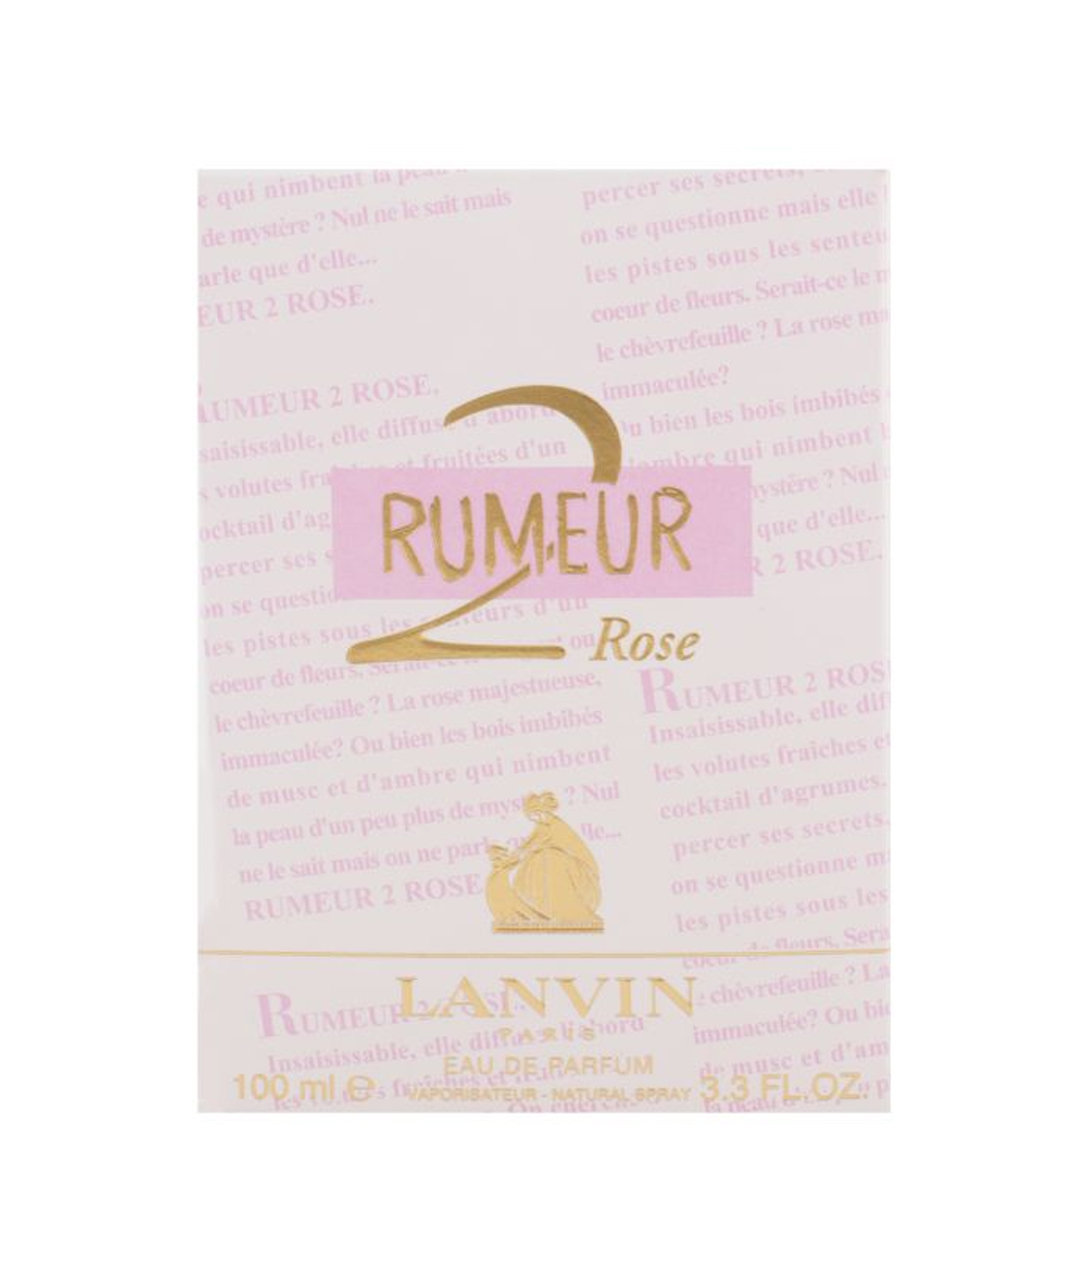 Perfume «Lanvin» Rumeur 2 Rose, for women, 100 ml